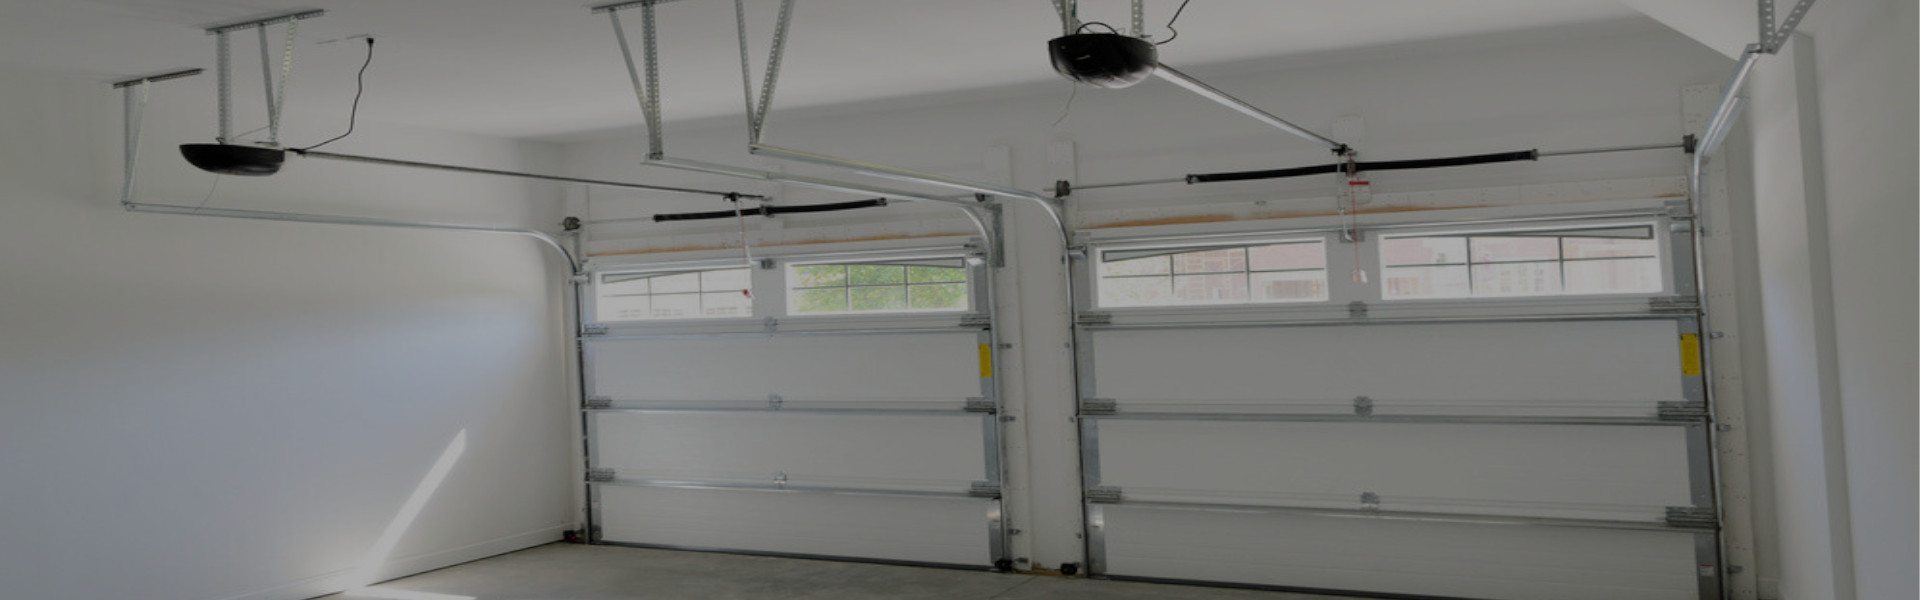 Slider Garage Door Repair, Glaziers in Thornton Heath, Broad Green, CR7